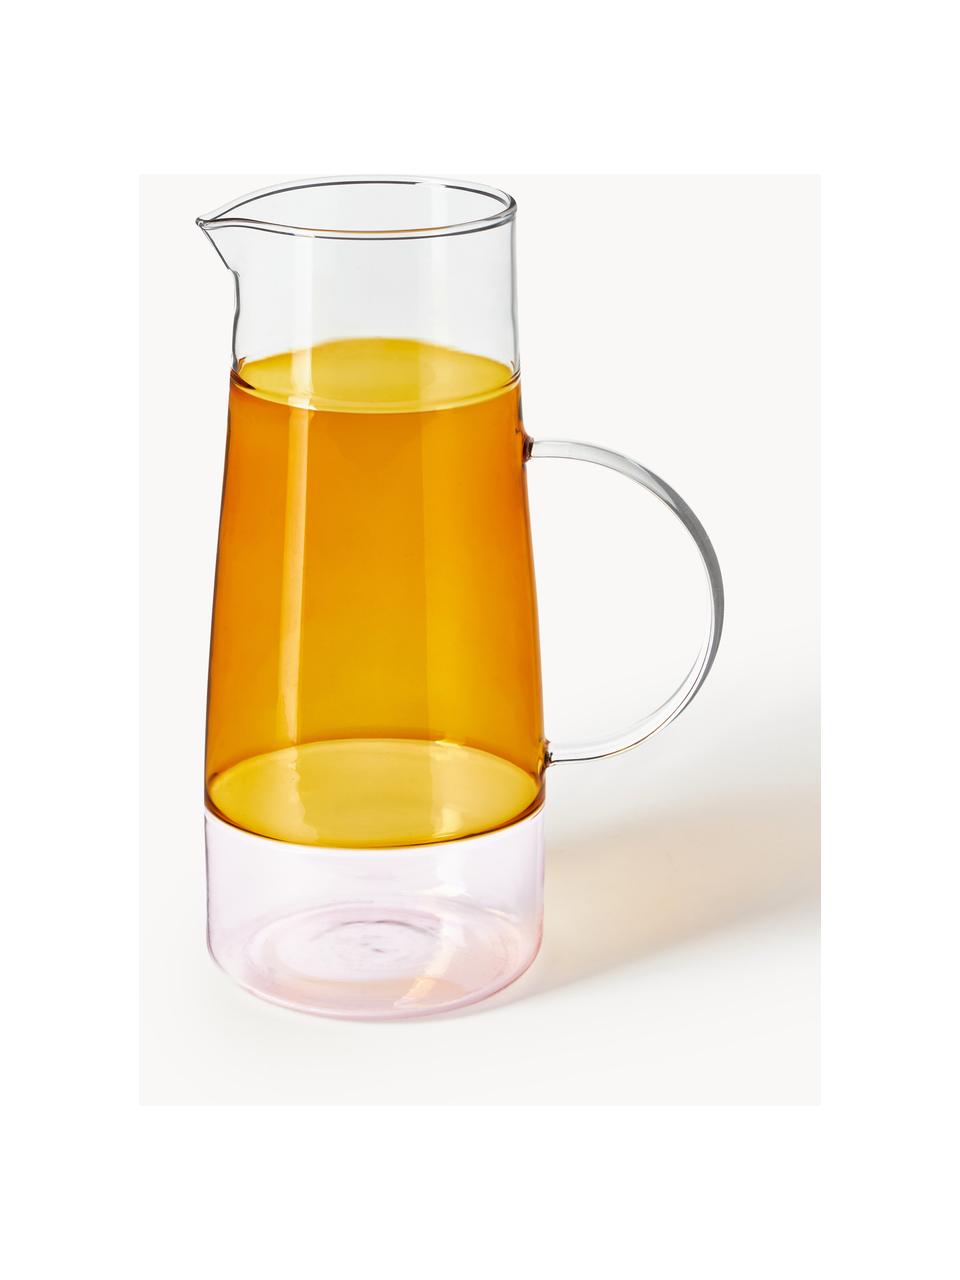 Mundgeblasener Krug Lemonade, 1.3 L, Glas, Orange, Rosa, 1.3 L